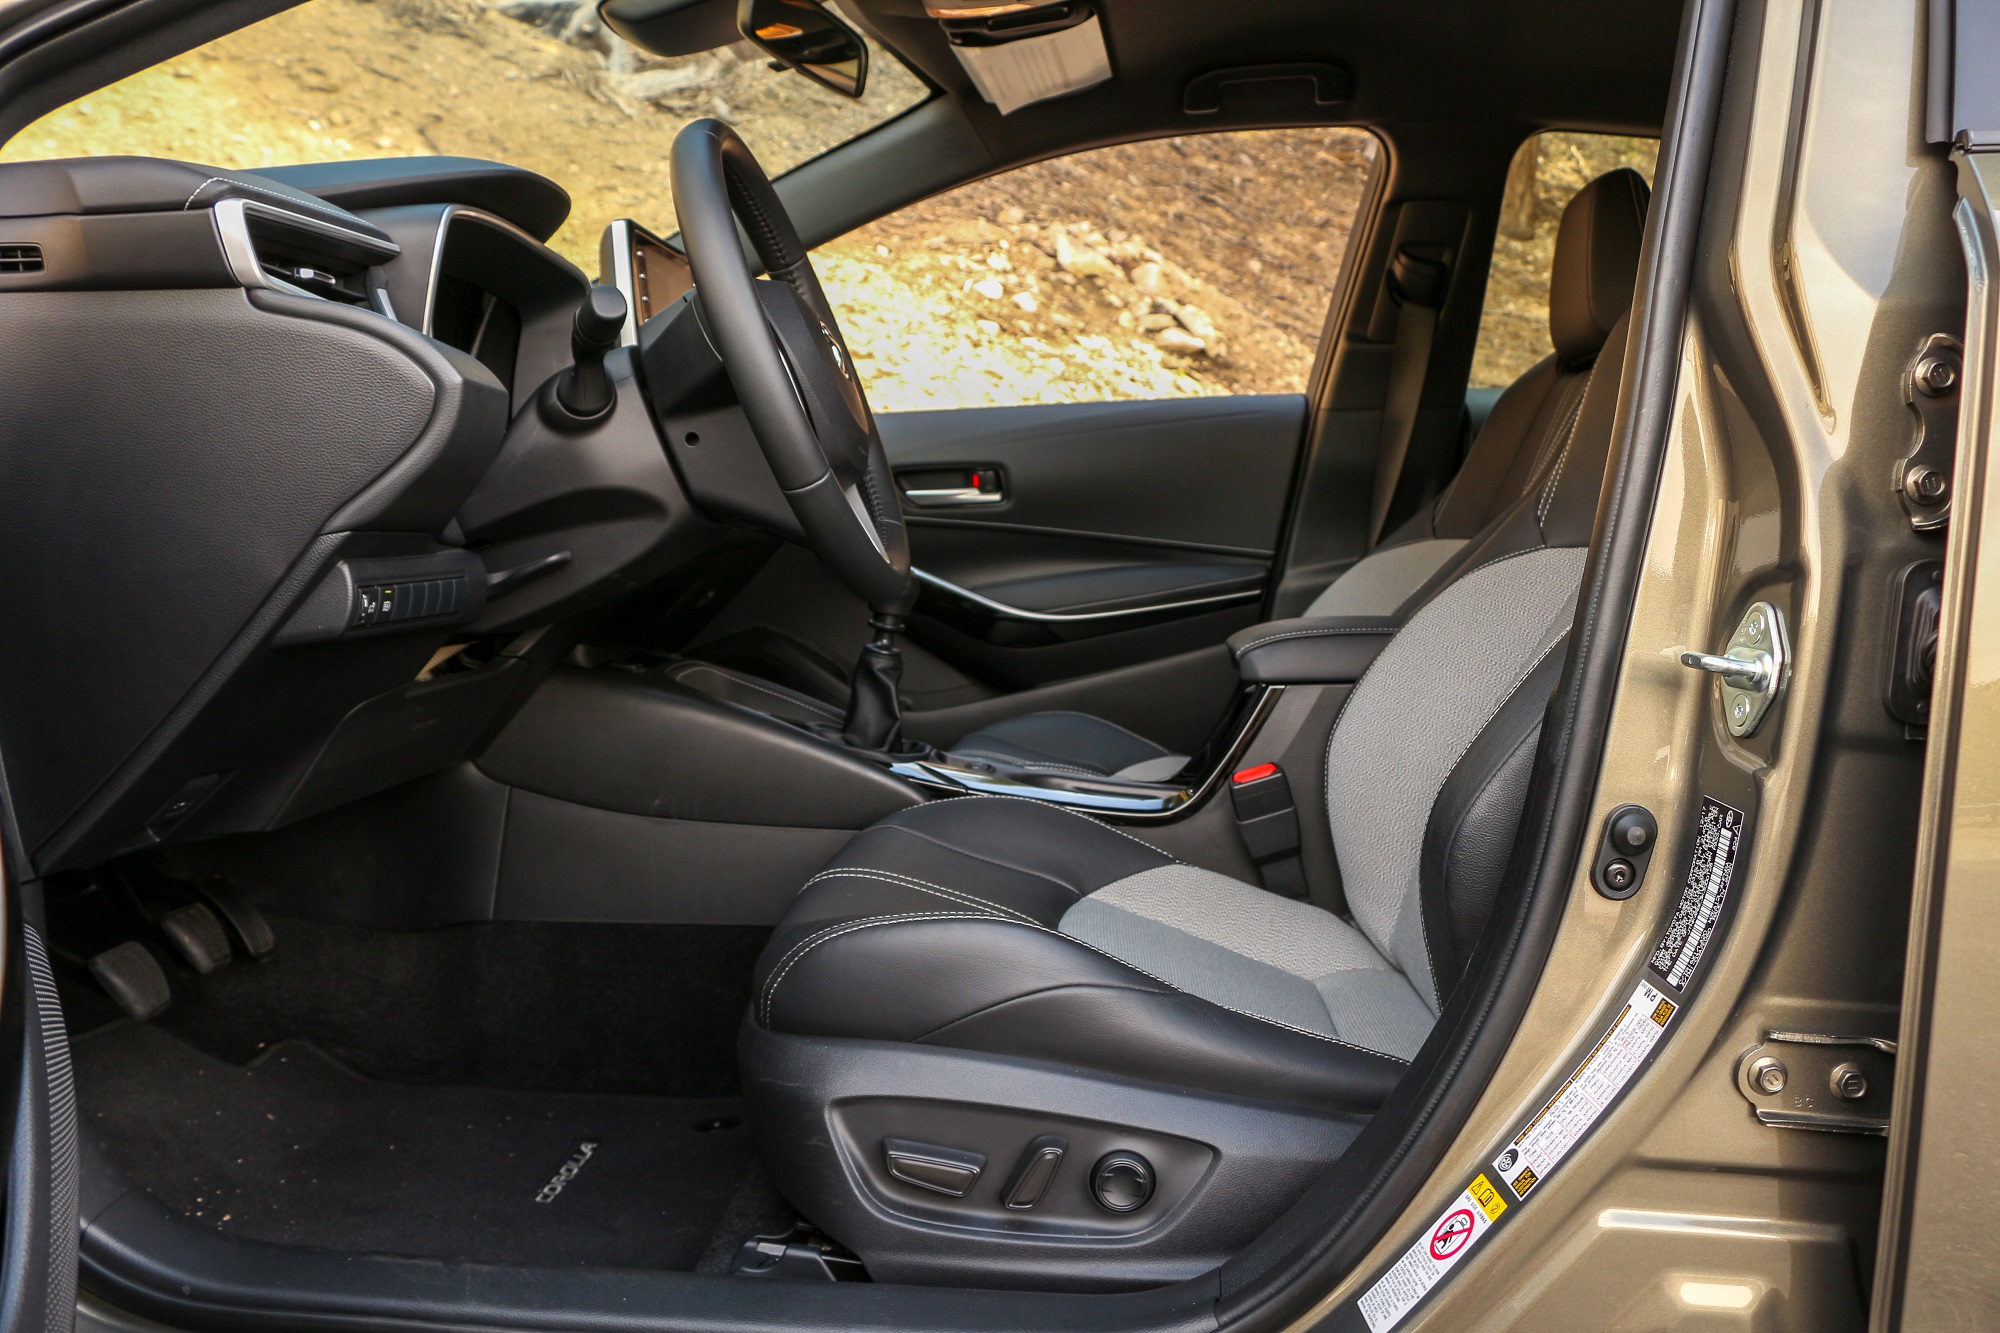 2019 Toyota Corolla Hatchback SE XSE Manual Transmission Interior Exterior Colors Bronze Oxide Engine EnTune Features Review News Comparison Honda Civic Sport Mazda3 Scionlife.com